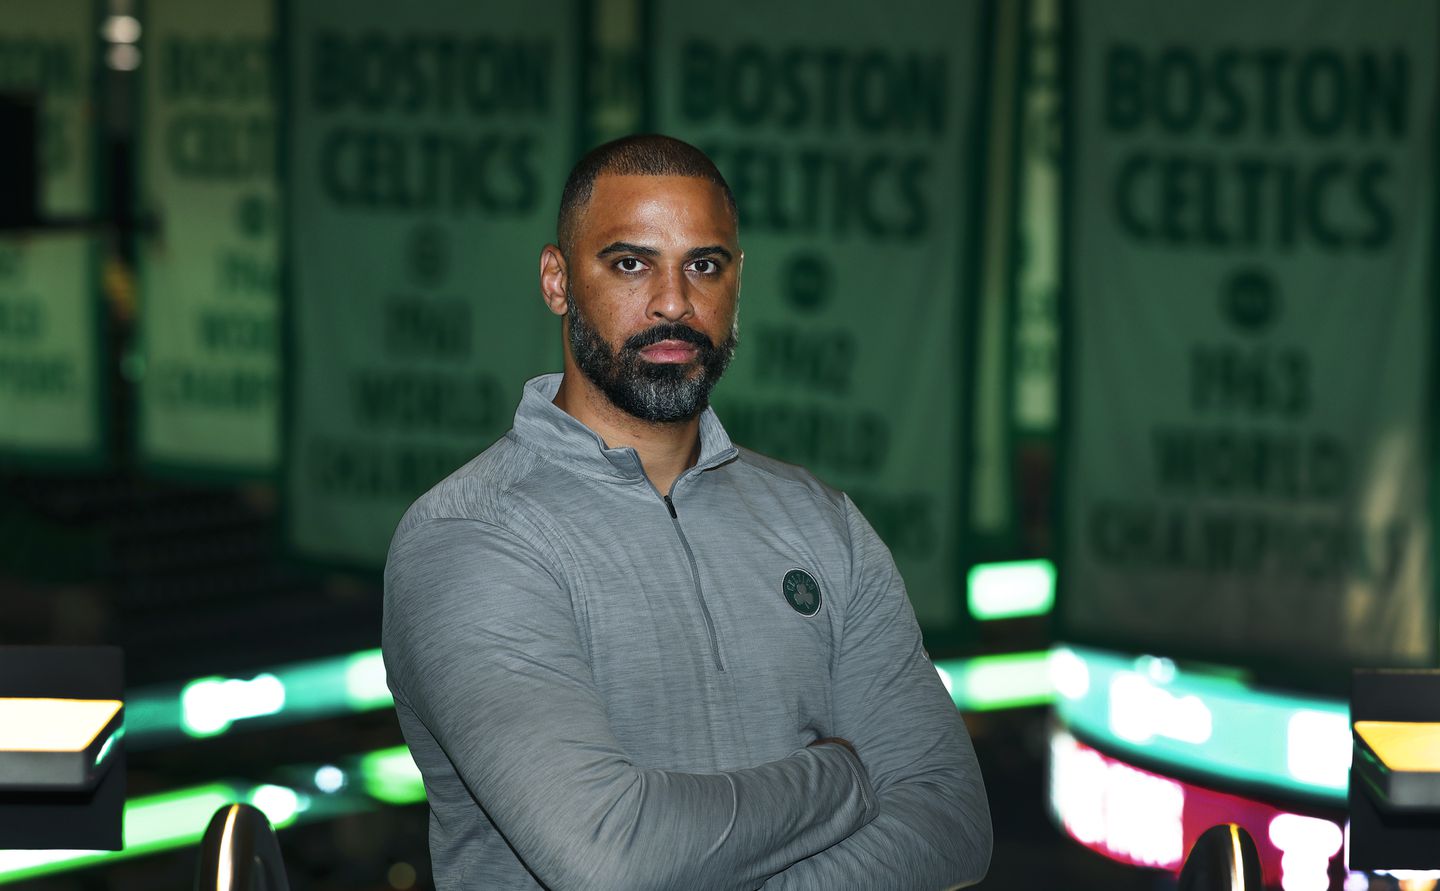 Causeway Street: Report: Celtics sign Denzel Valentine to training camp  roster